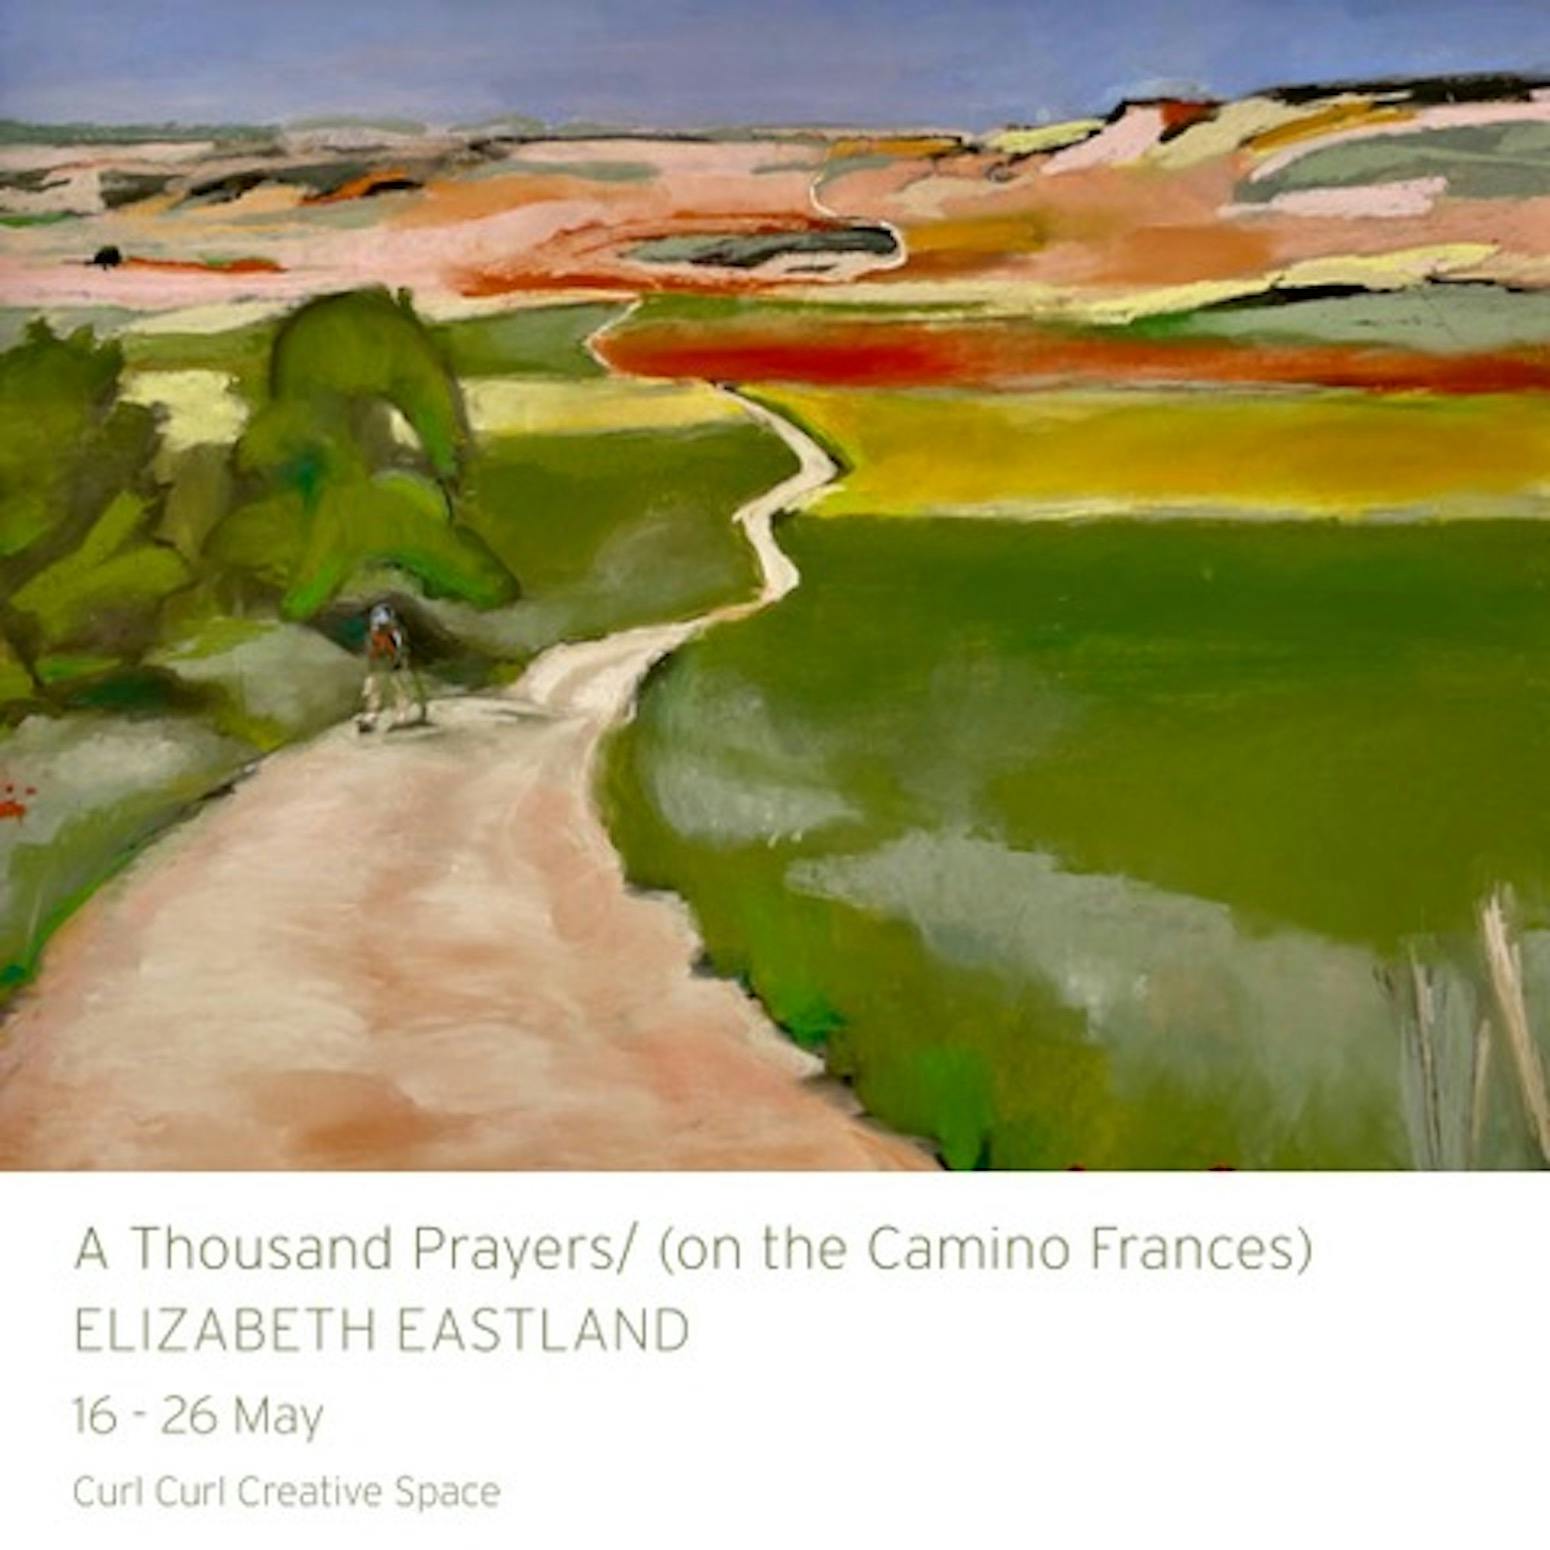 A Thousand Prayers / (on the Camino Frances)